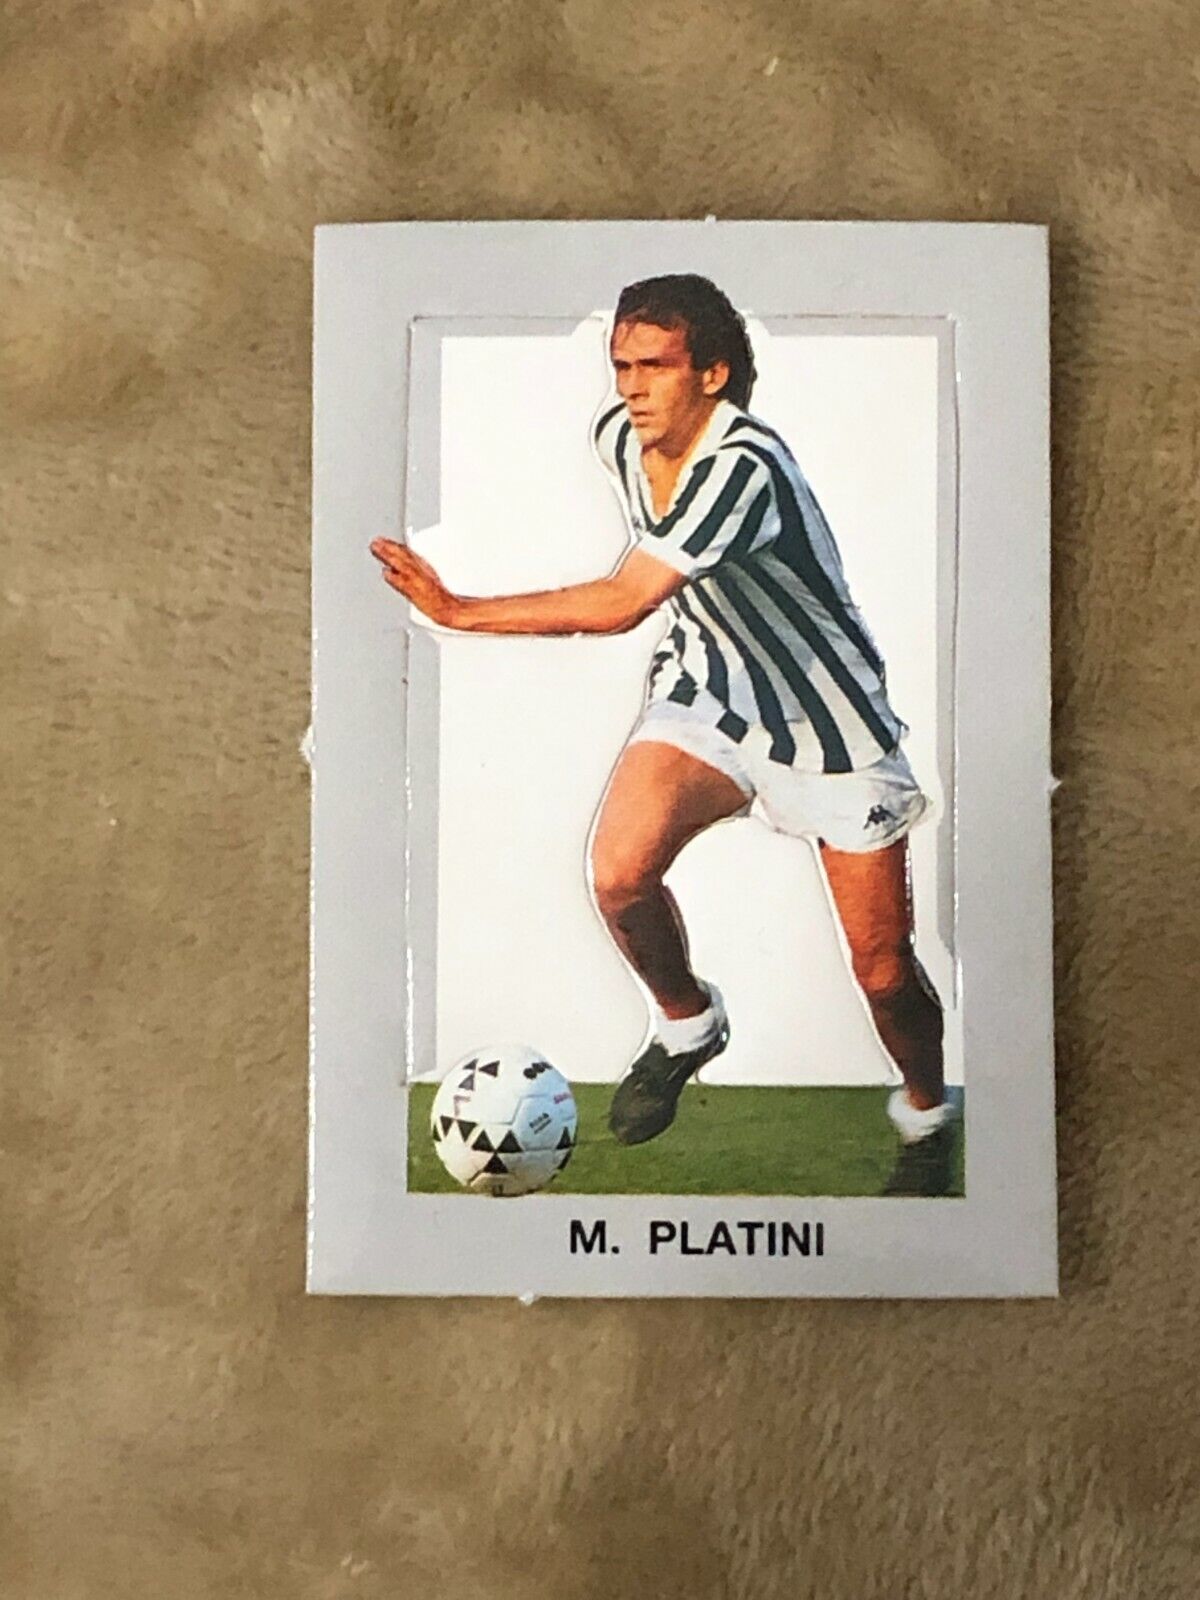 Figurina fustellata M. Platini Juventus sorpresa patatine anni 80 di Aa.vv.,  19